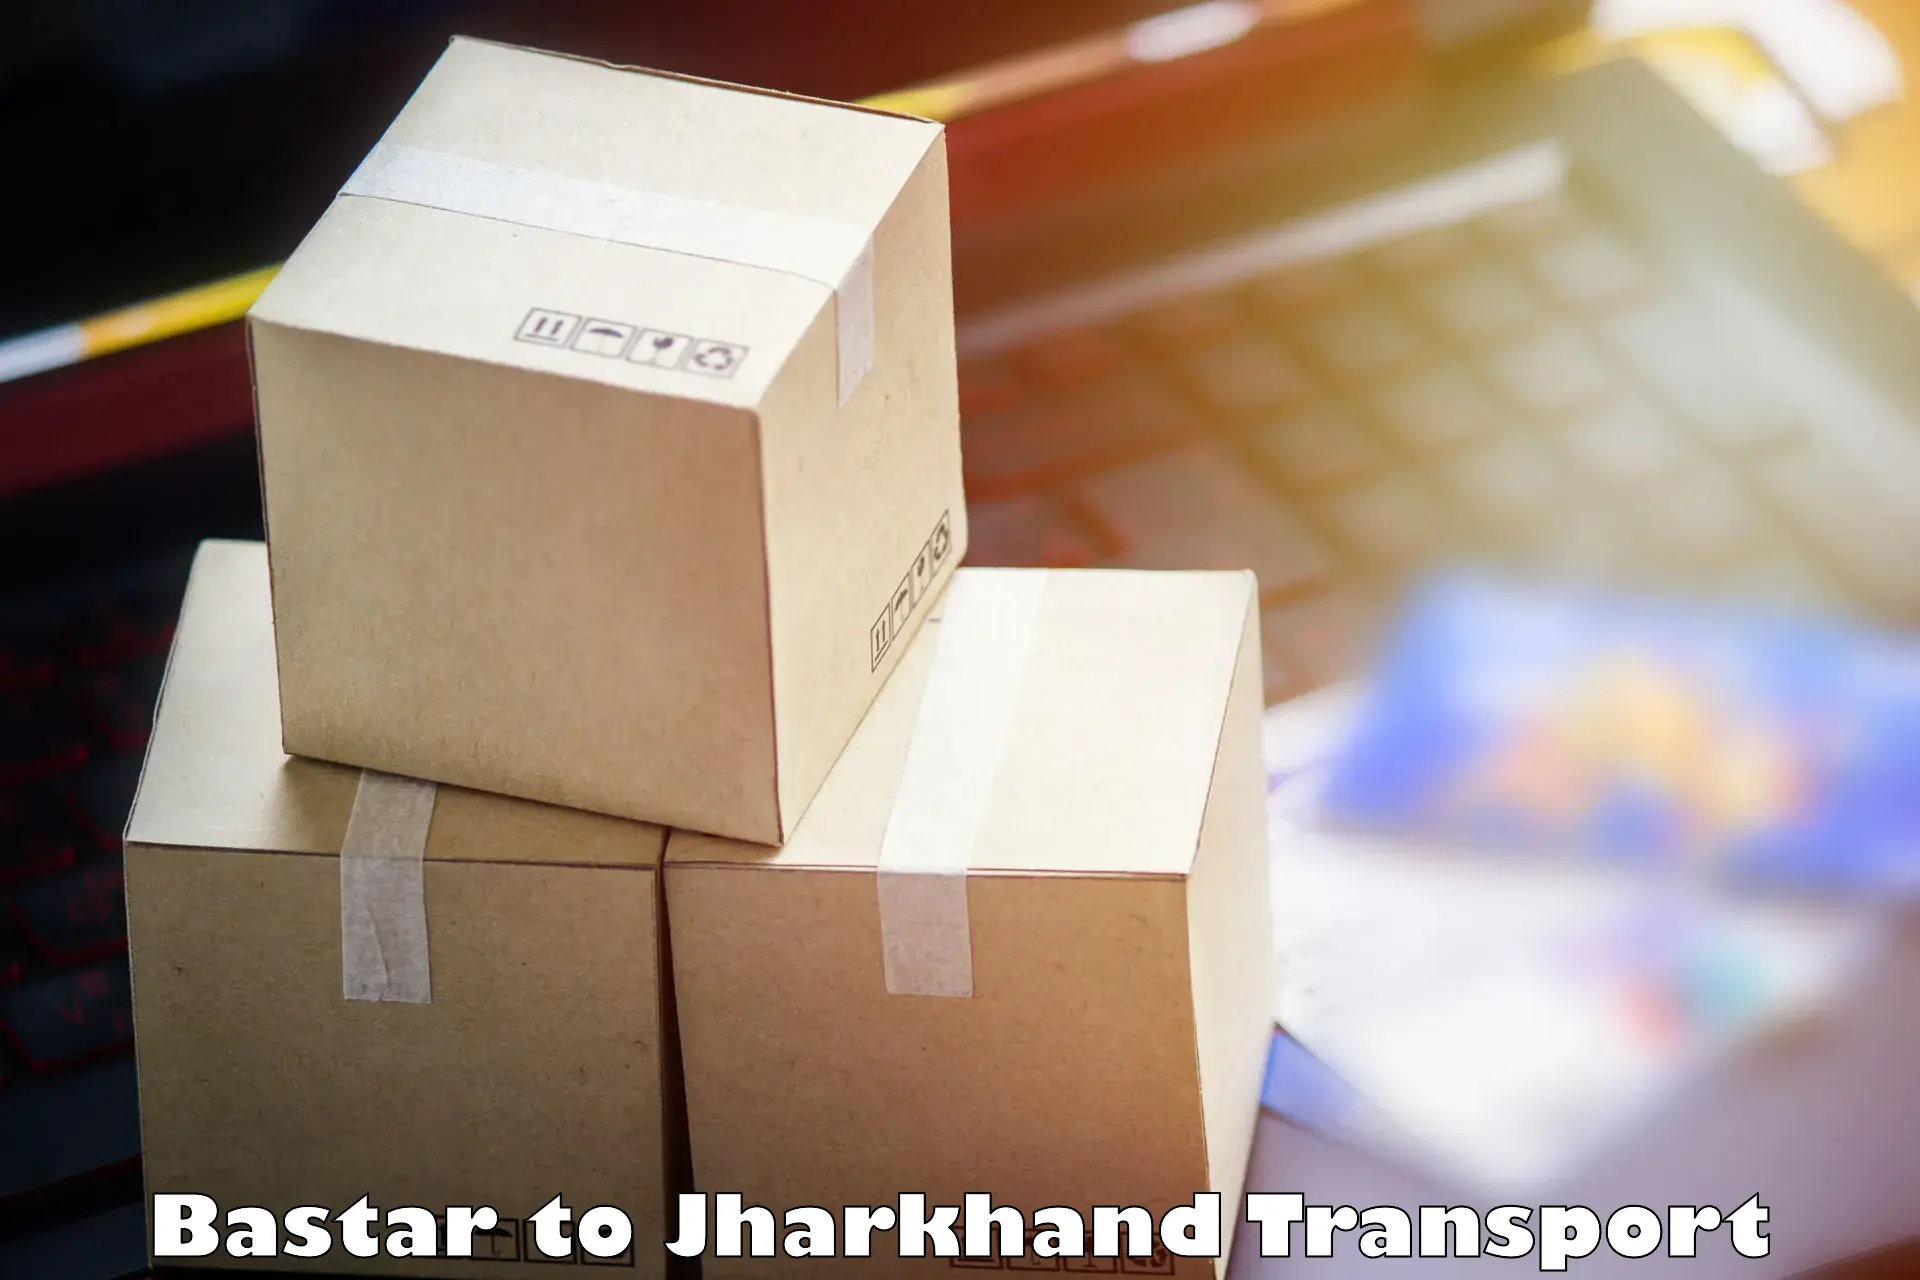 Daily transport service Bastar to Jharkhand